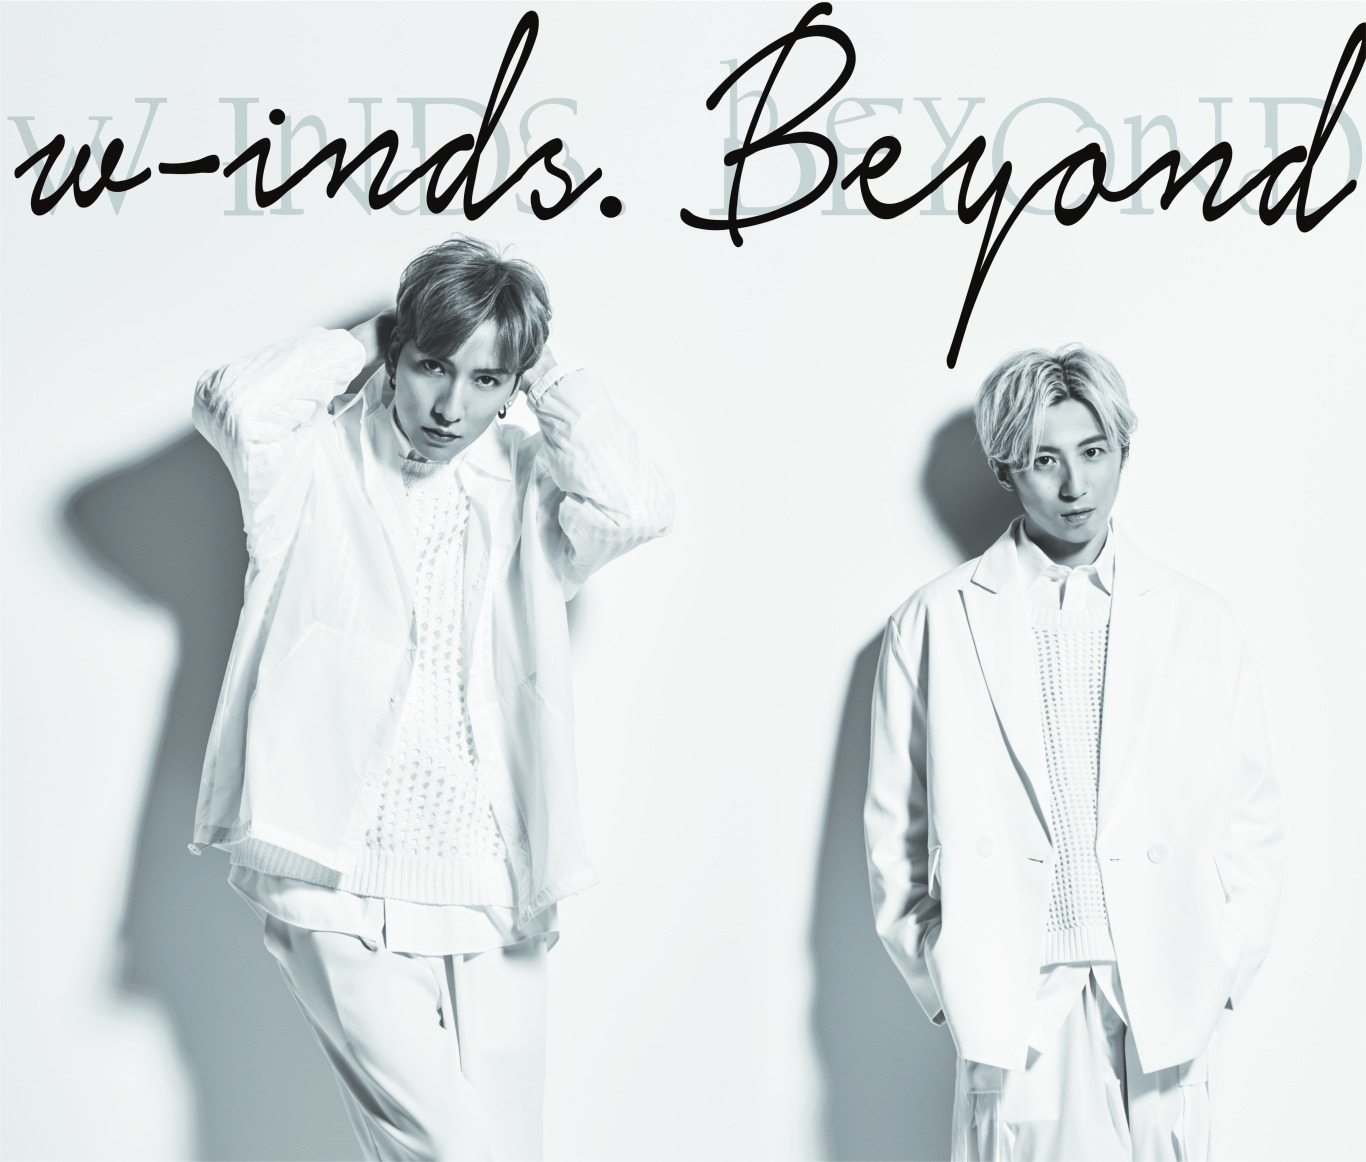 『Beyond』初回限定盤 [CD+DVD]ジャケット写真